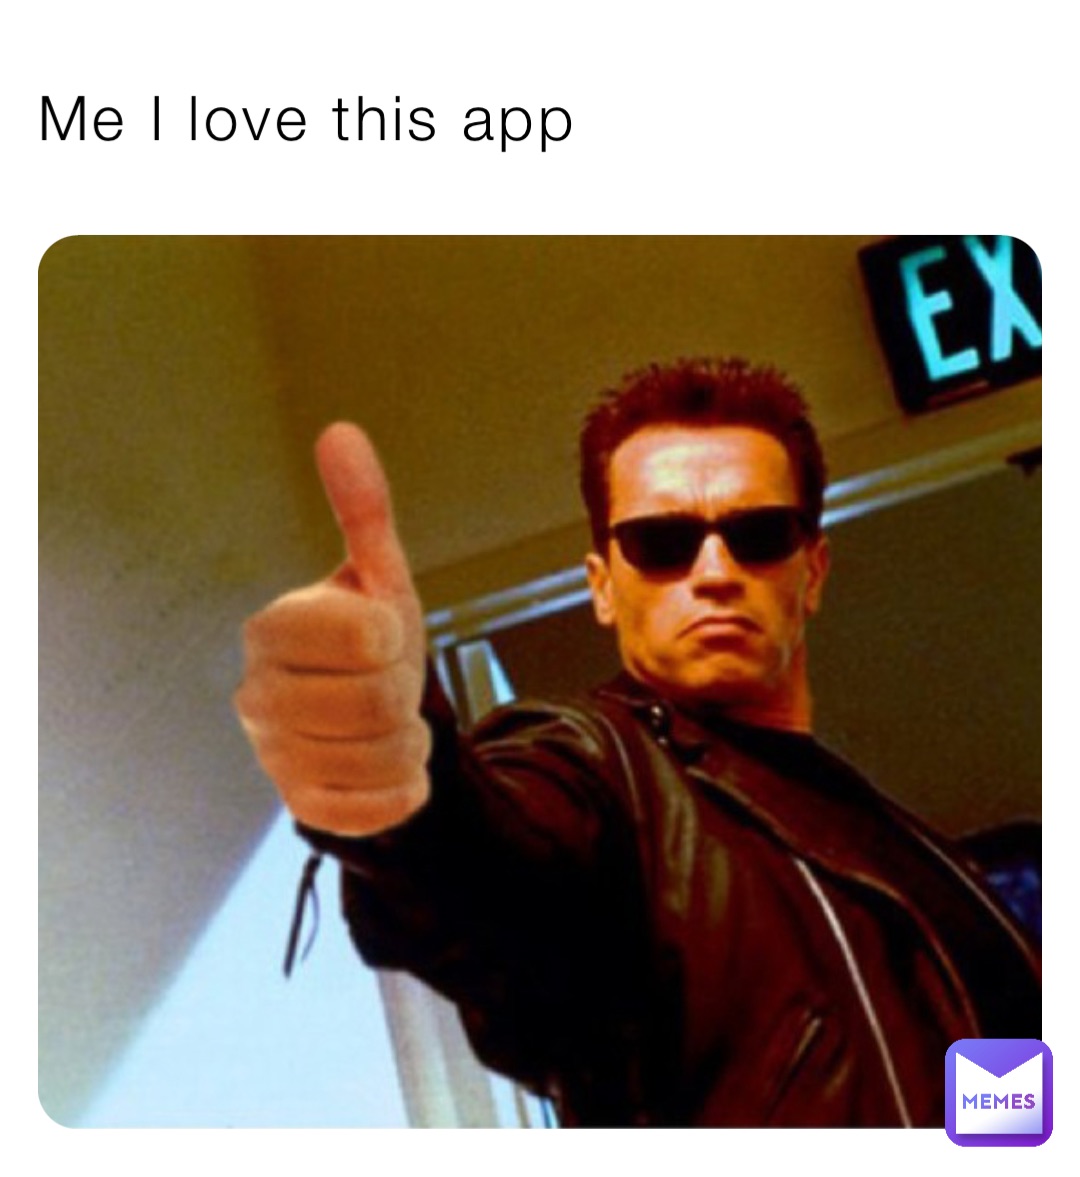 Me I love this app